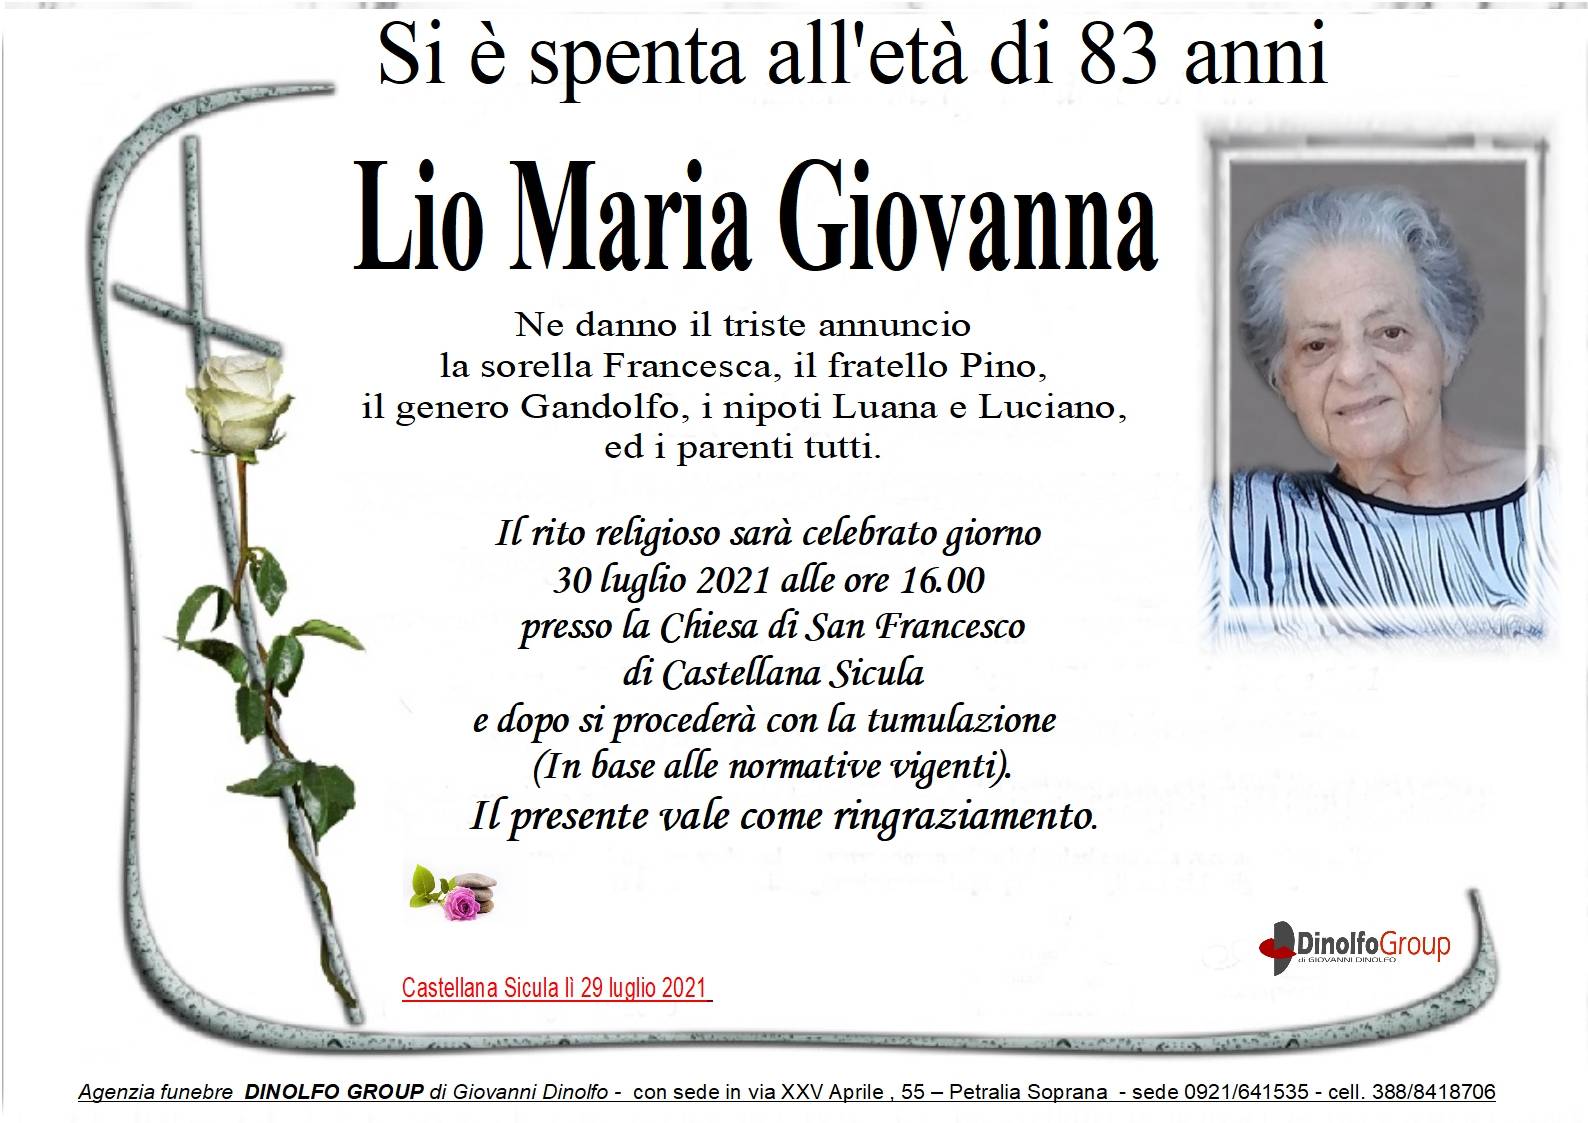 Maria Giovanna Lio